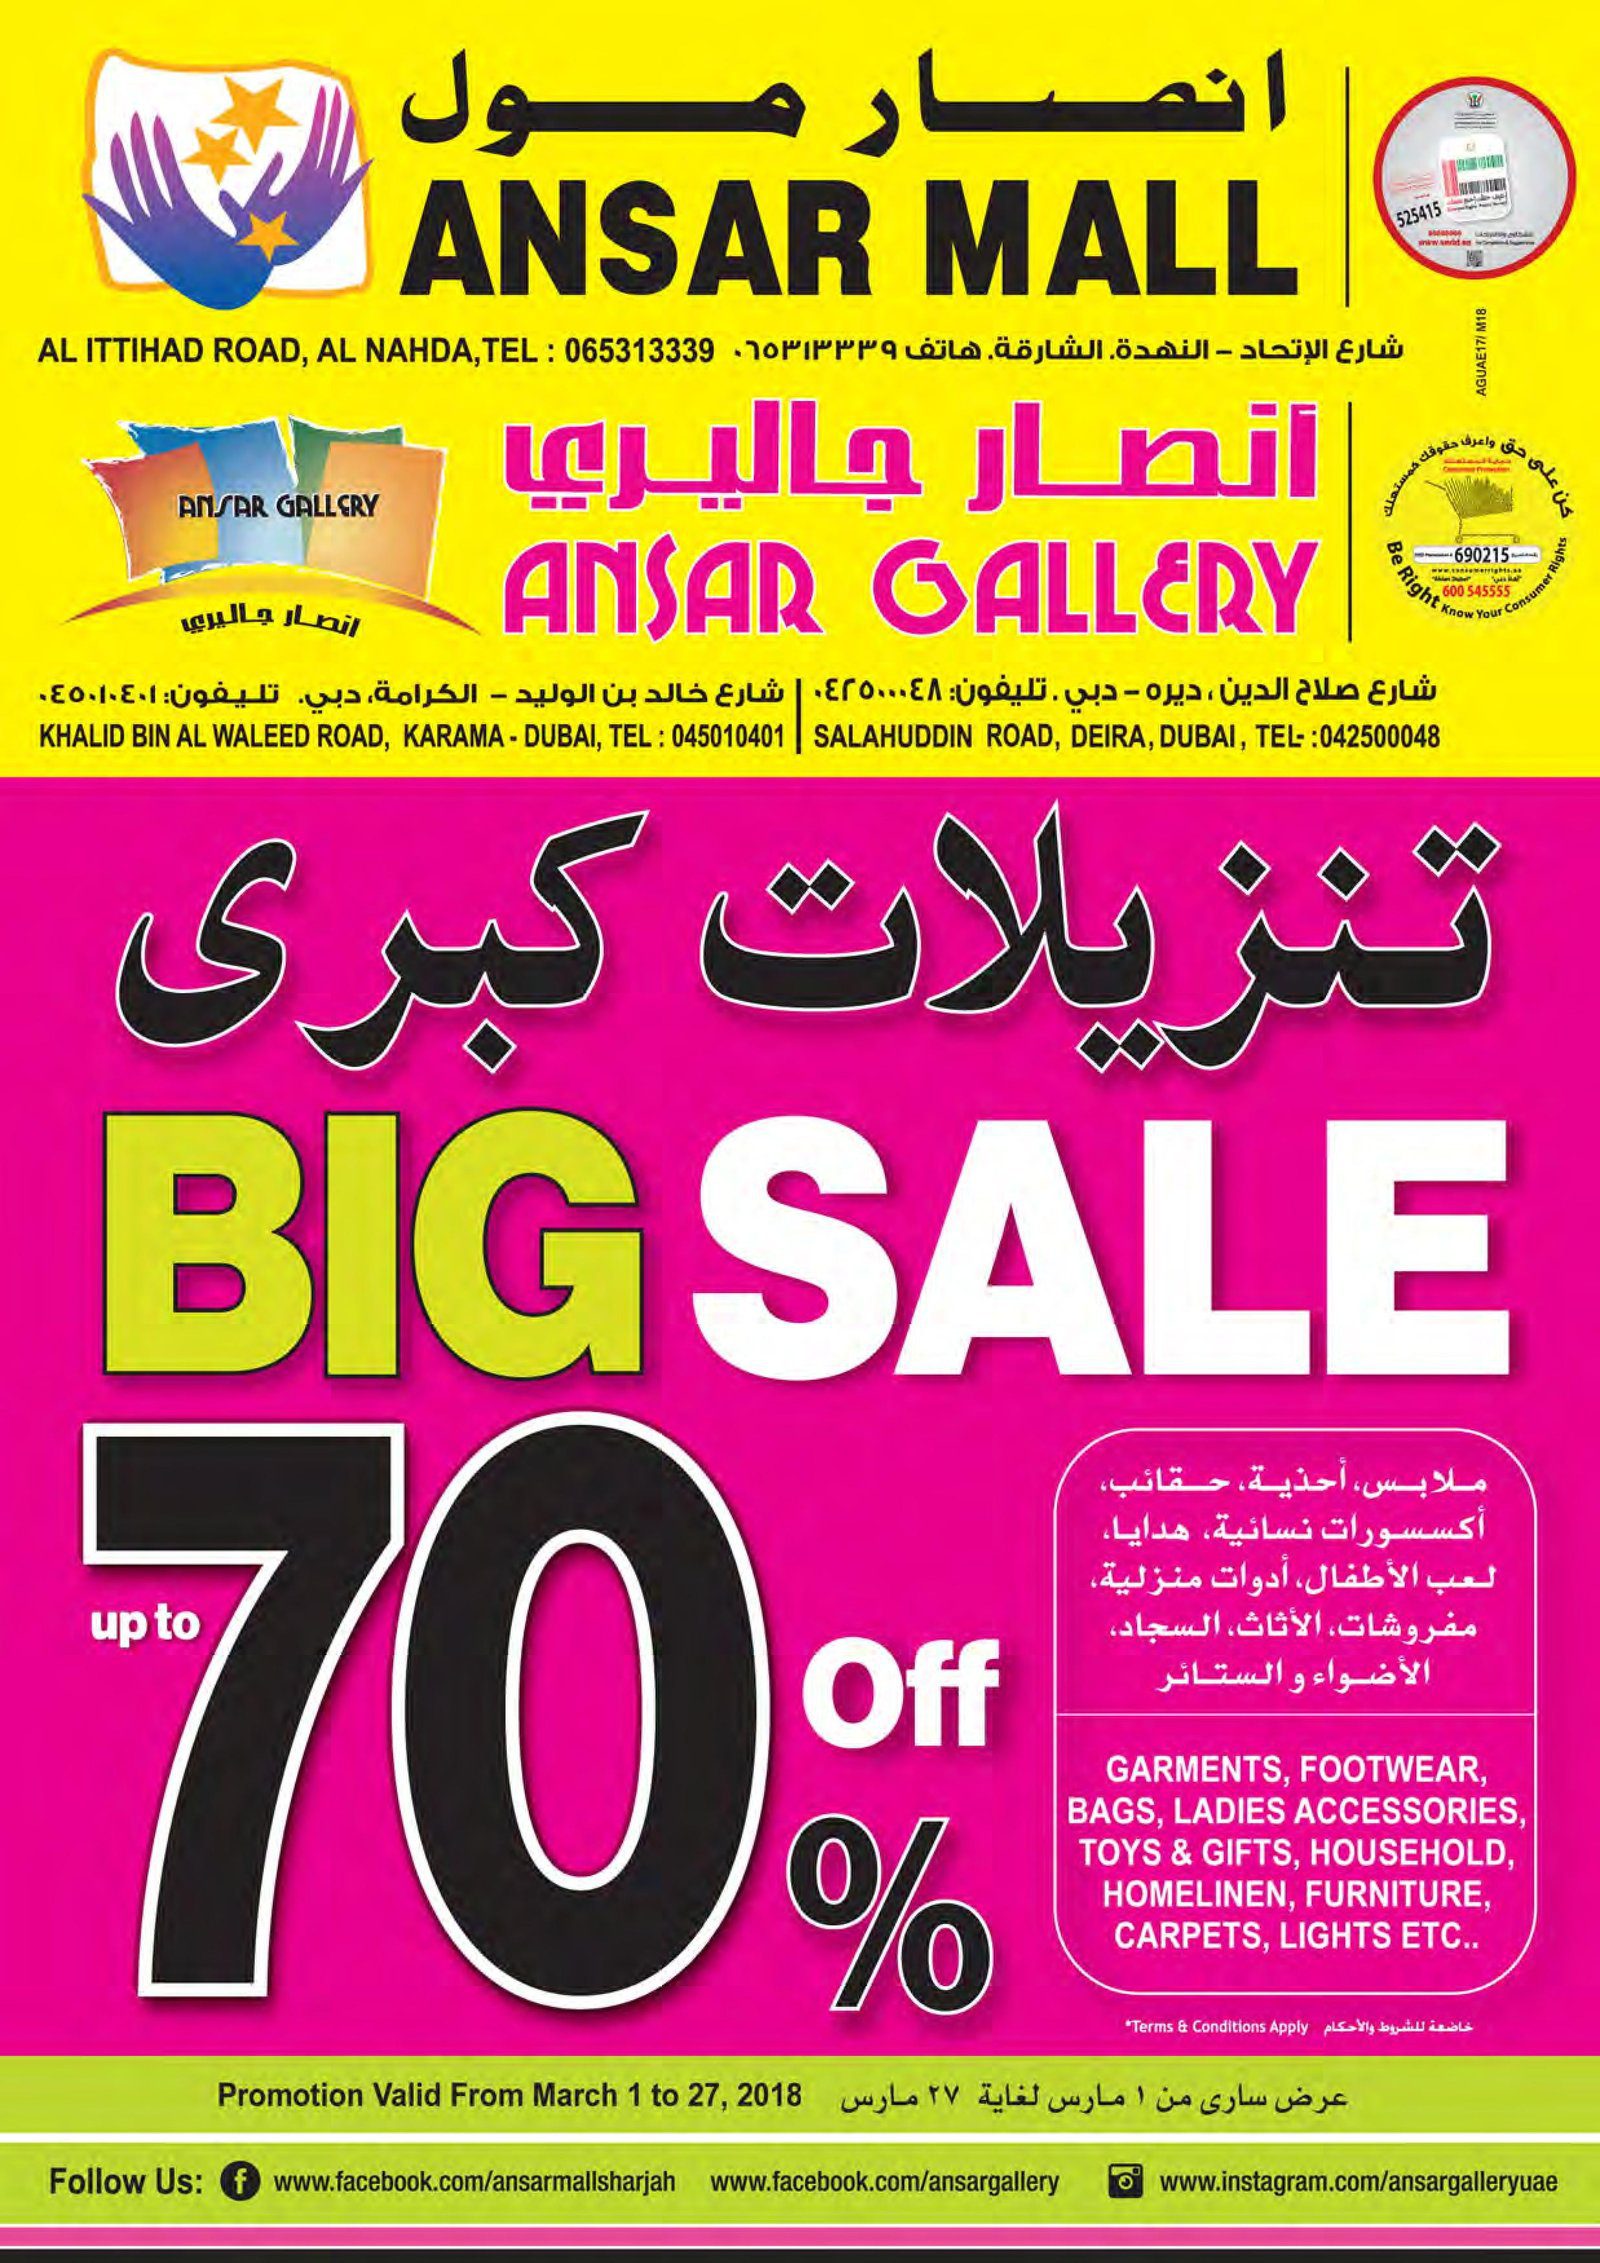 Ansar Gallery Mall Offer